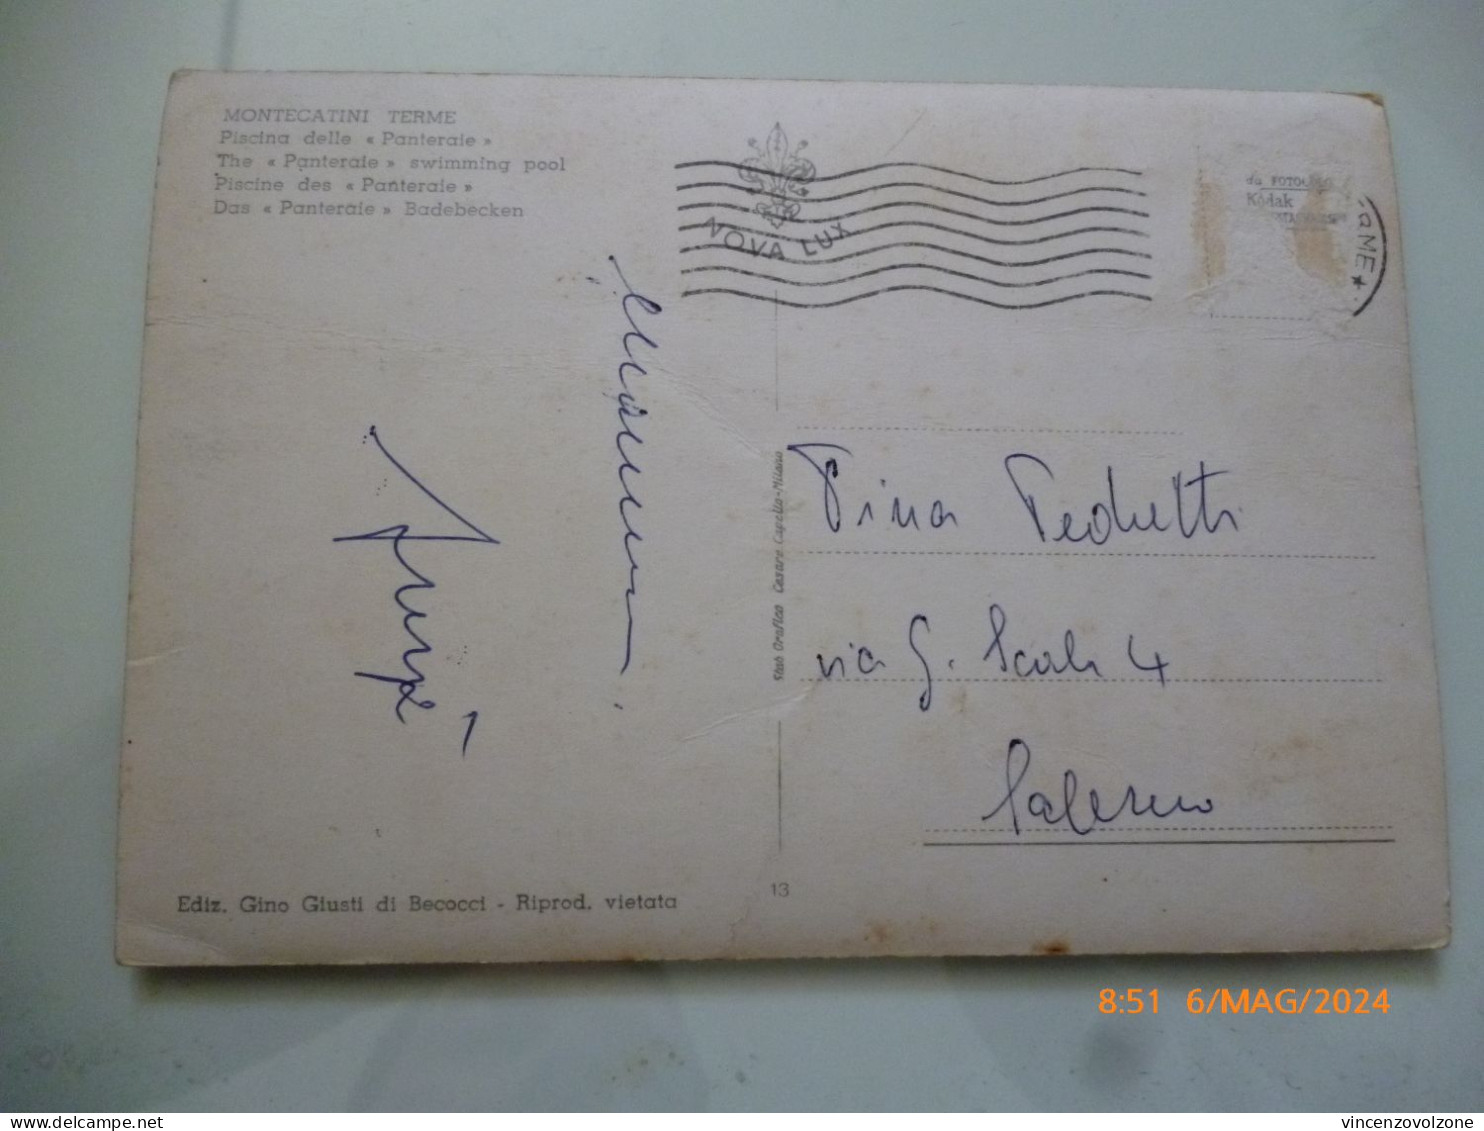 Cartolina Viaggiata "MONTECATINI TERME Piscina Delle Panteraie"  1963 - Siena